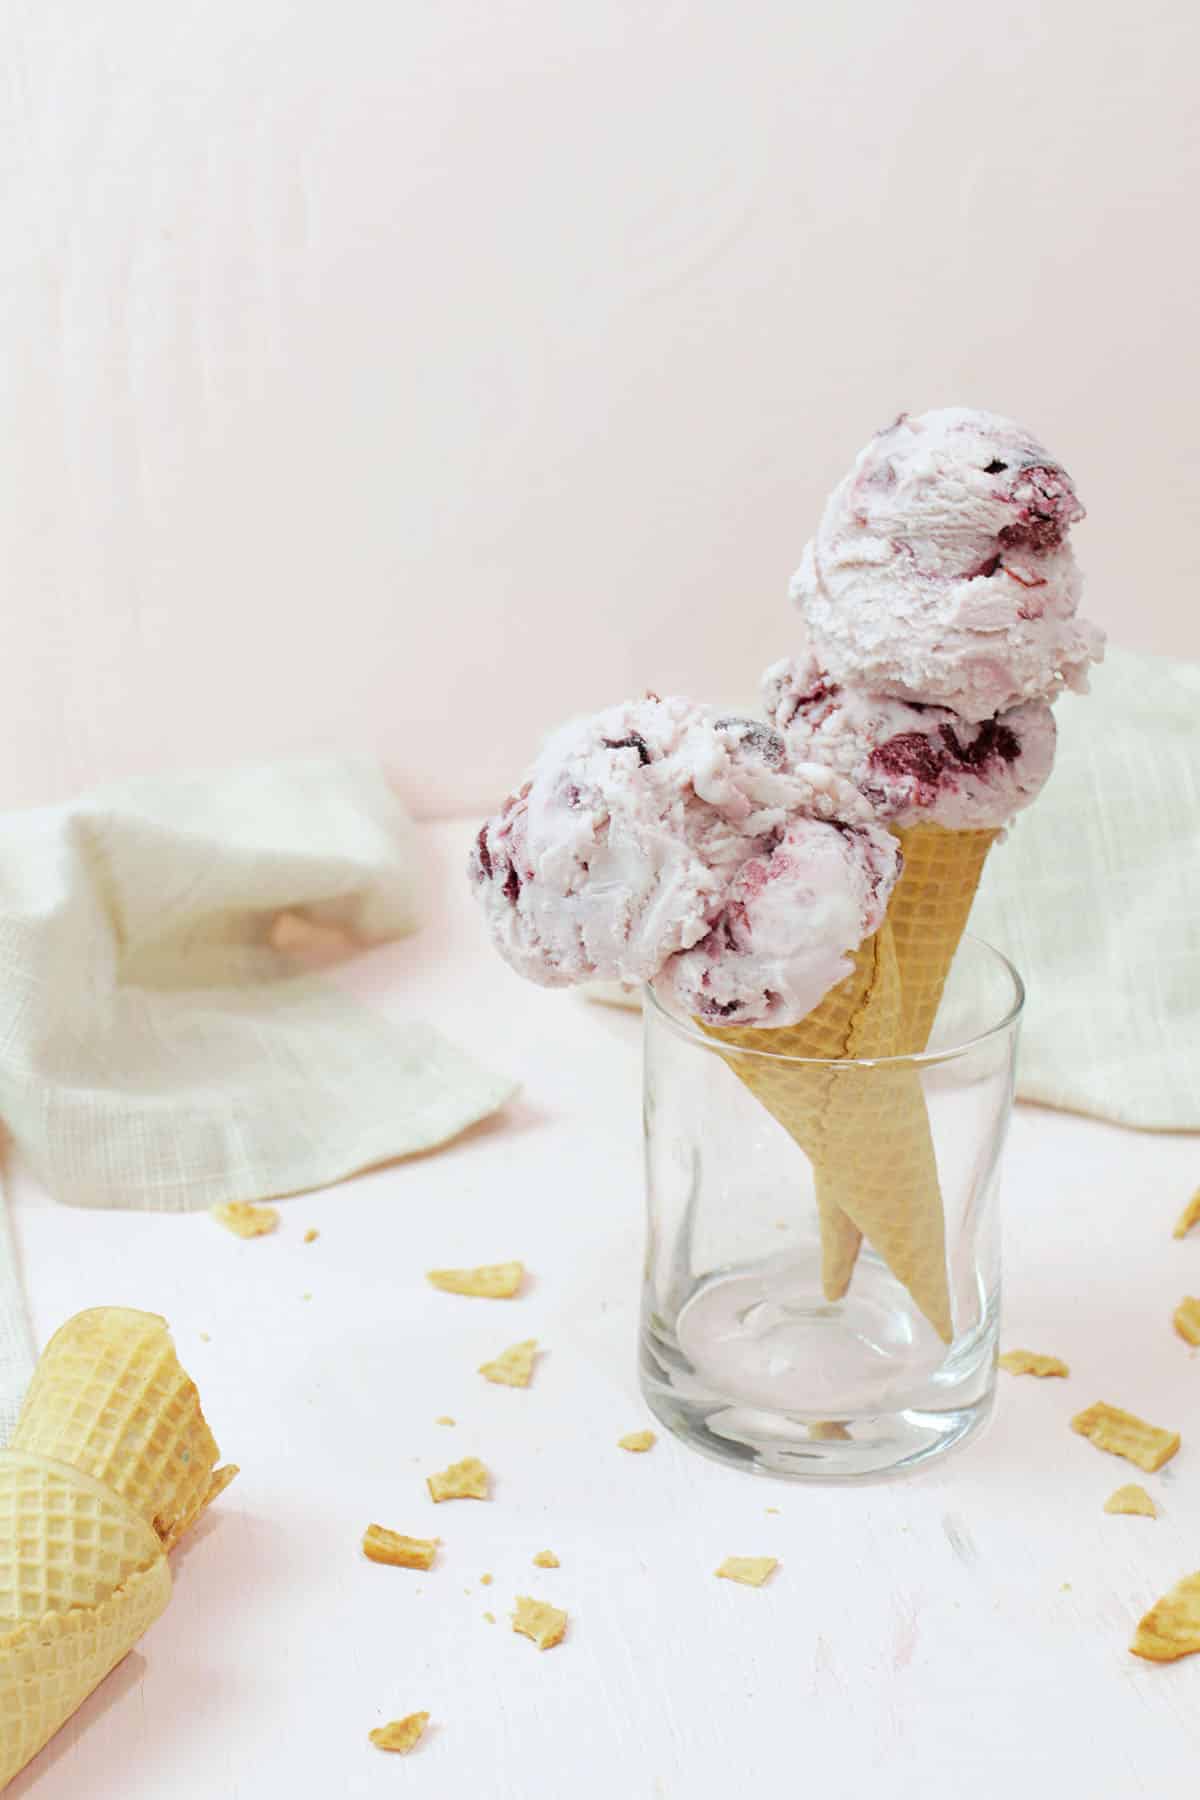 two cones with black cherry ice cream on them